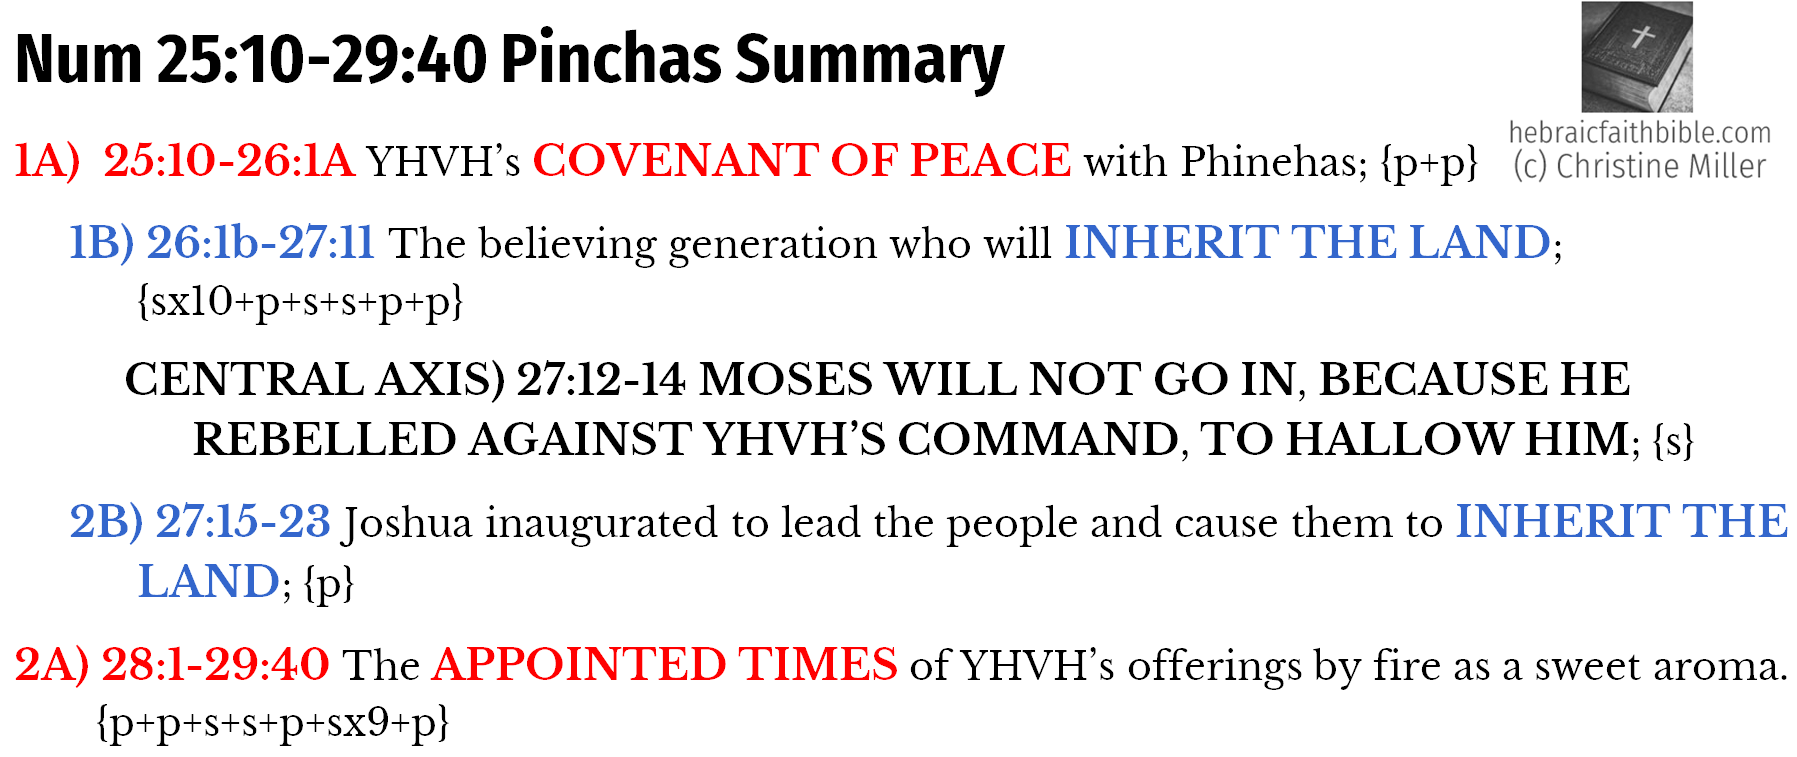 Num 25:10-29:40 Pinchas Chiasm Summary | hebraicfaithbible.com